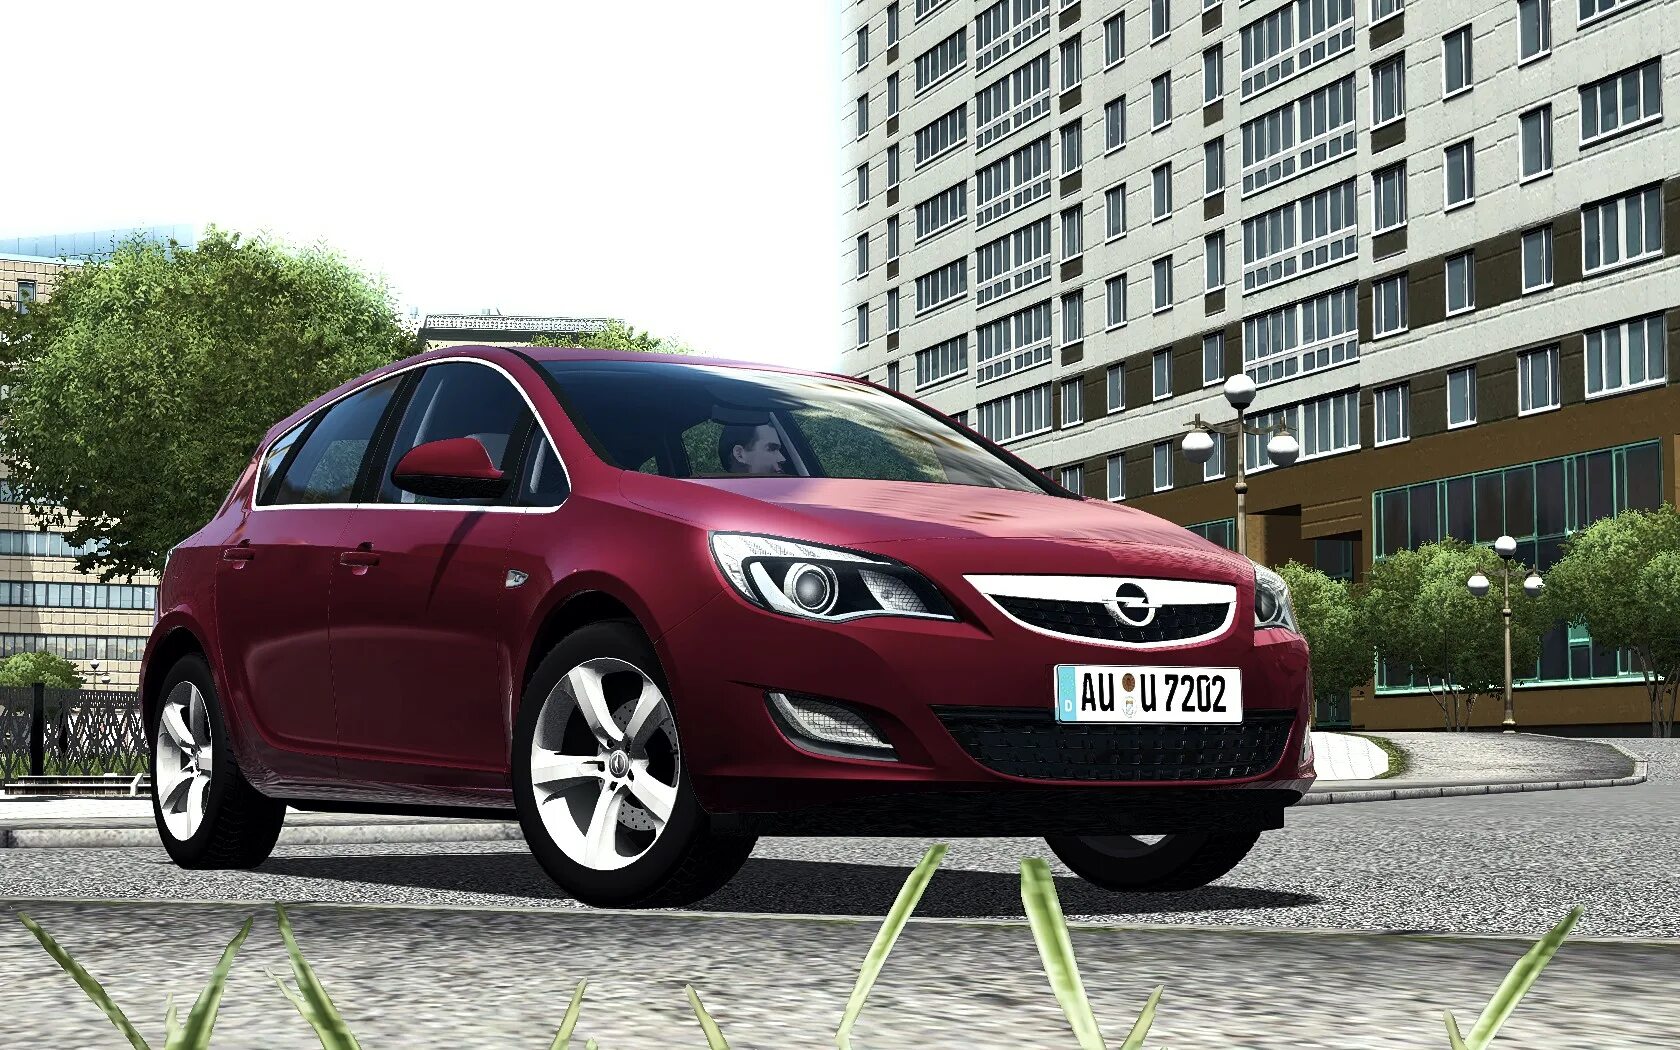 Opel city. Opel Astra City car Driving 1.5.9.2. Opel Astra g для City car Driving.